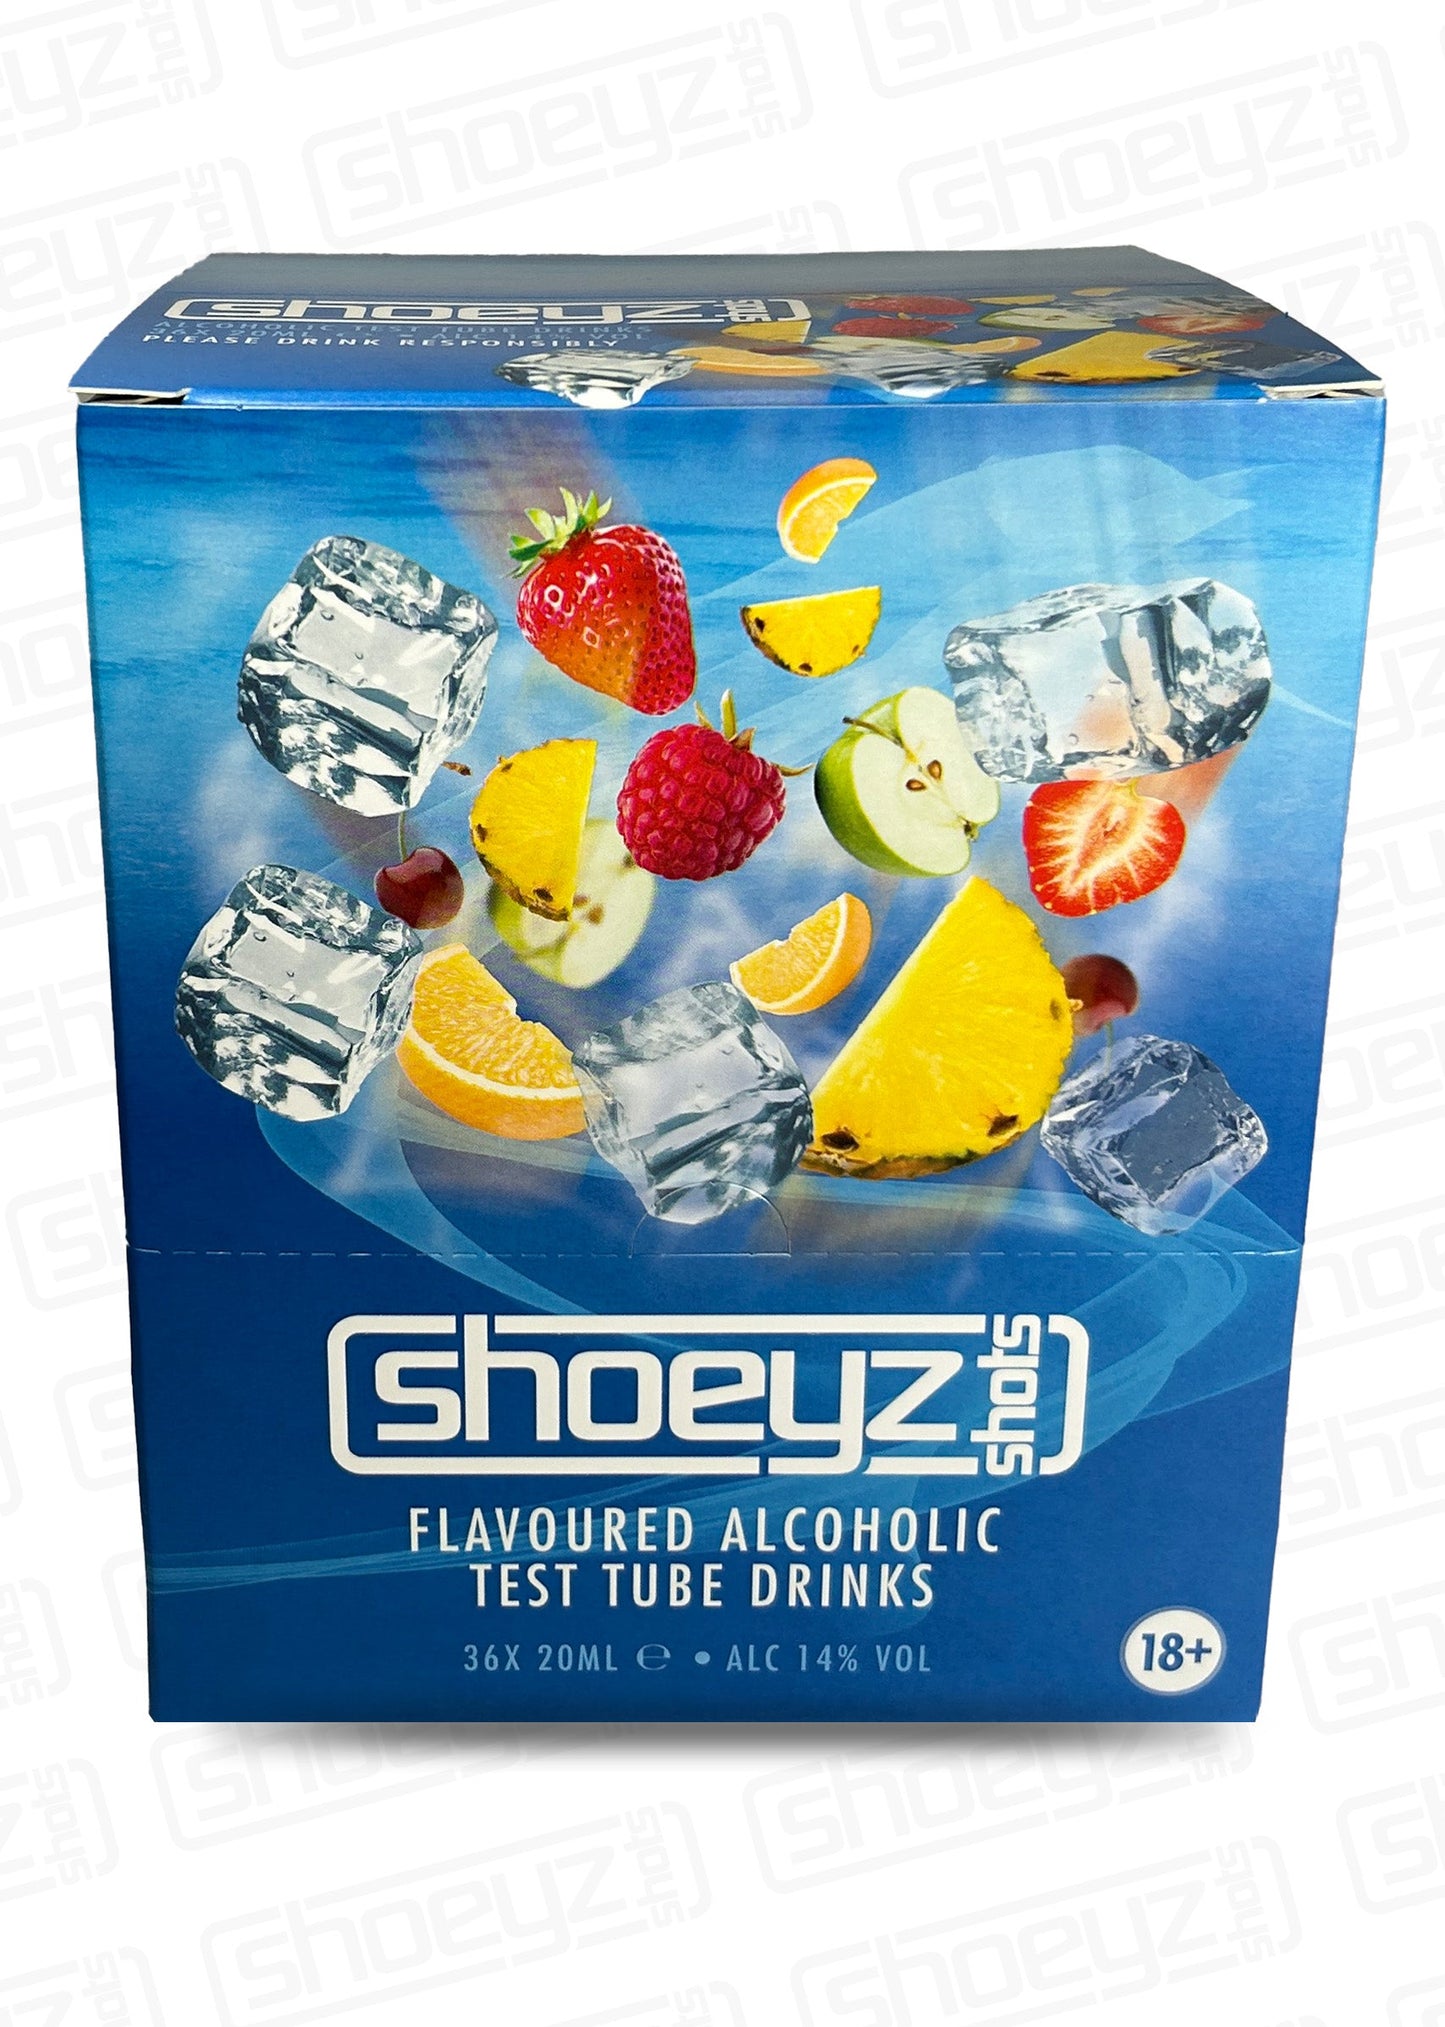 shoeyz vodka test tube shots cherry rear case